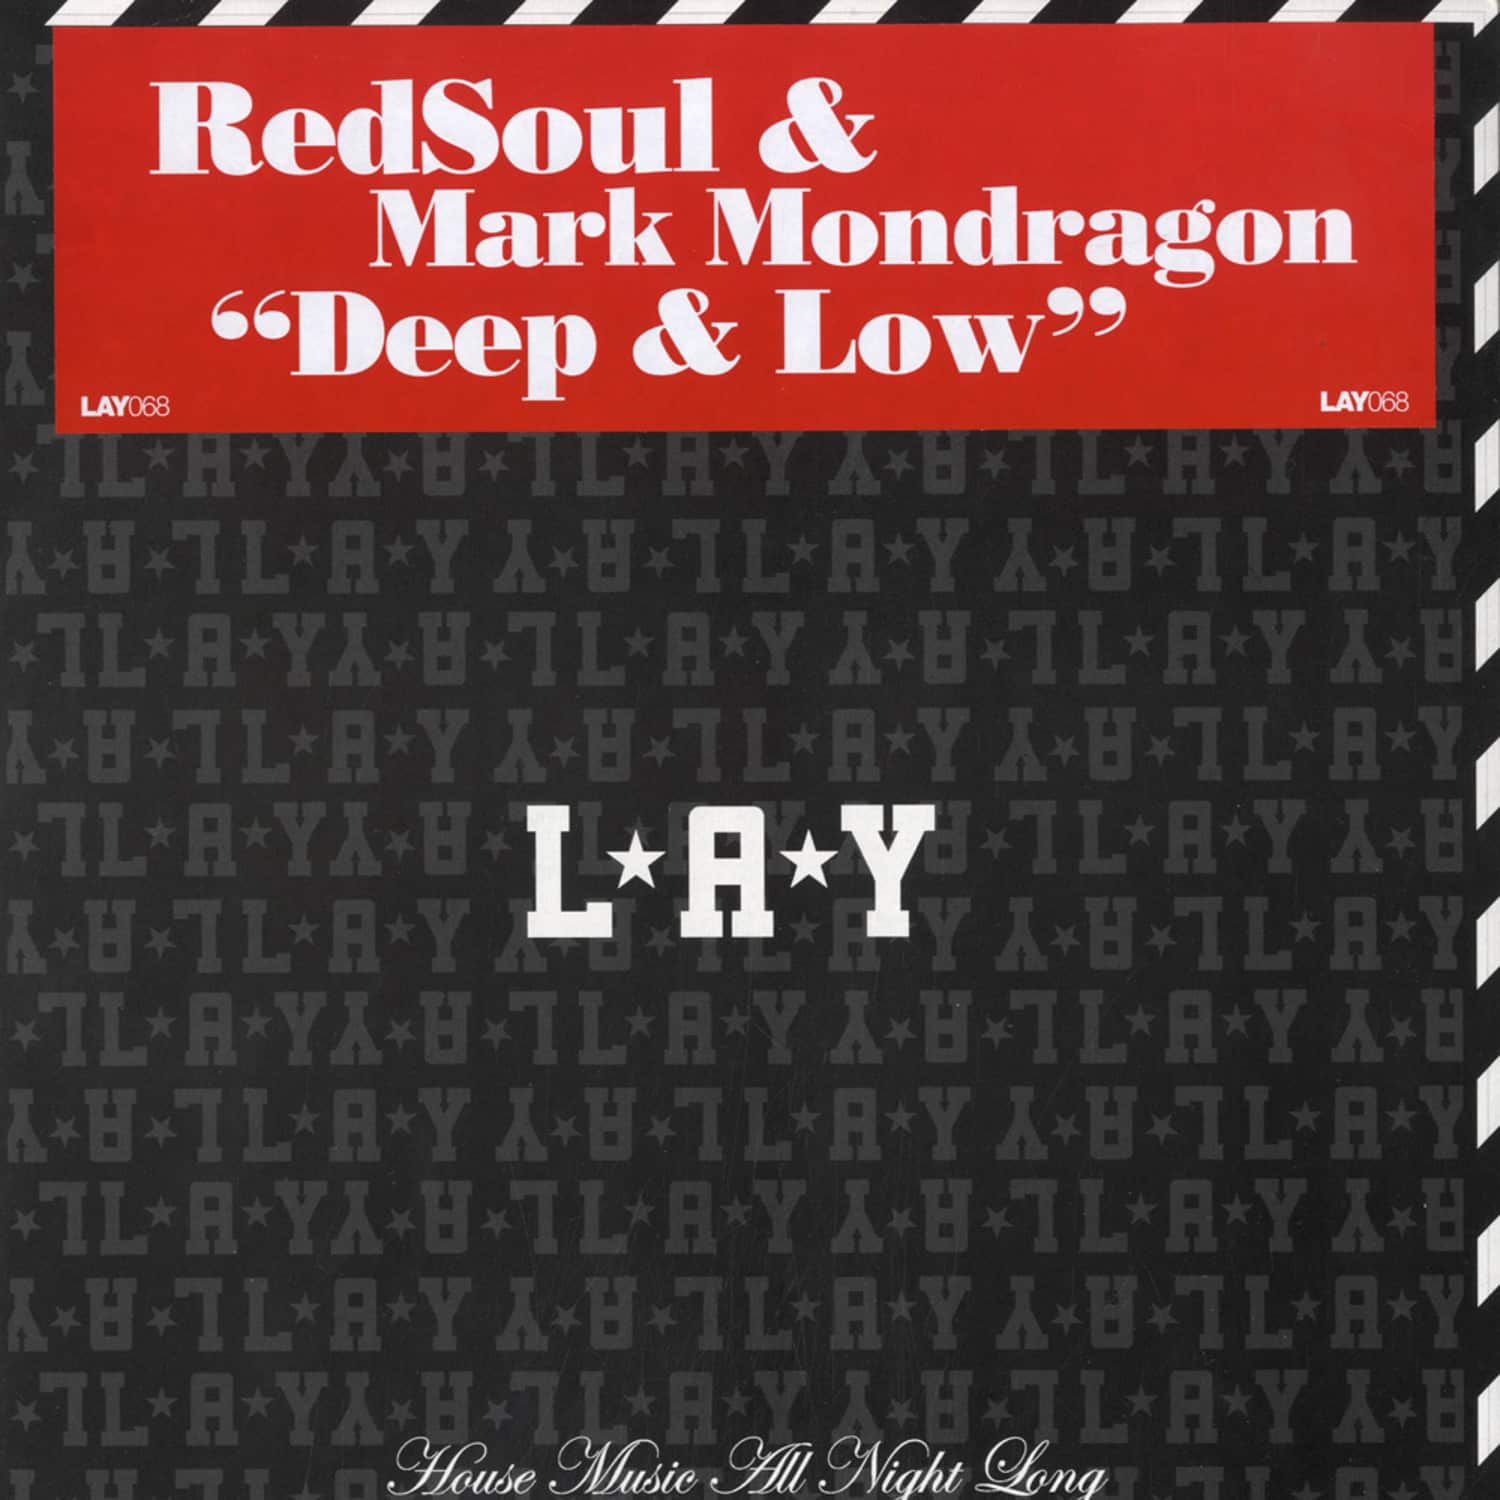 Redsoul & Mark Mondragon - DEEP & LOW